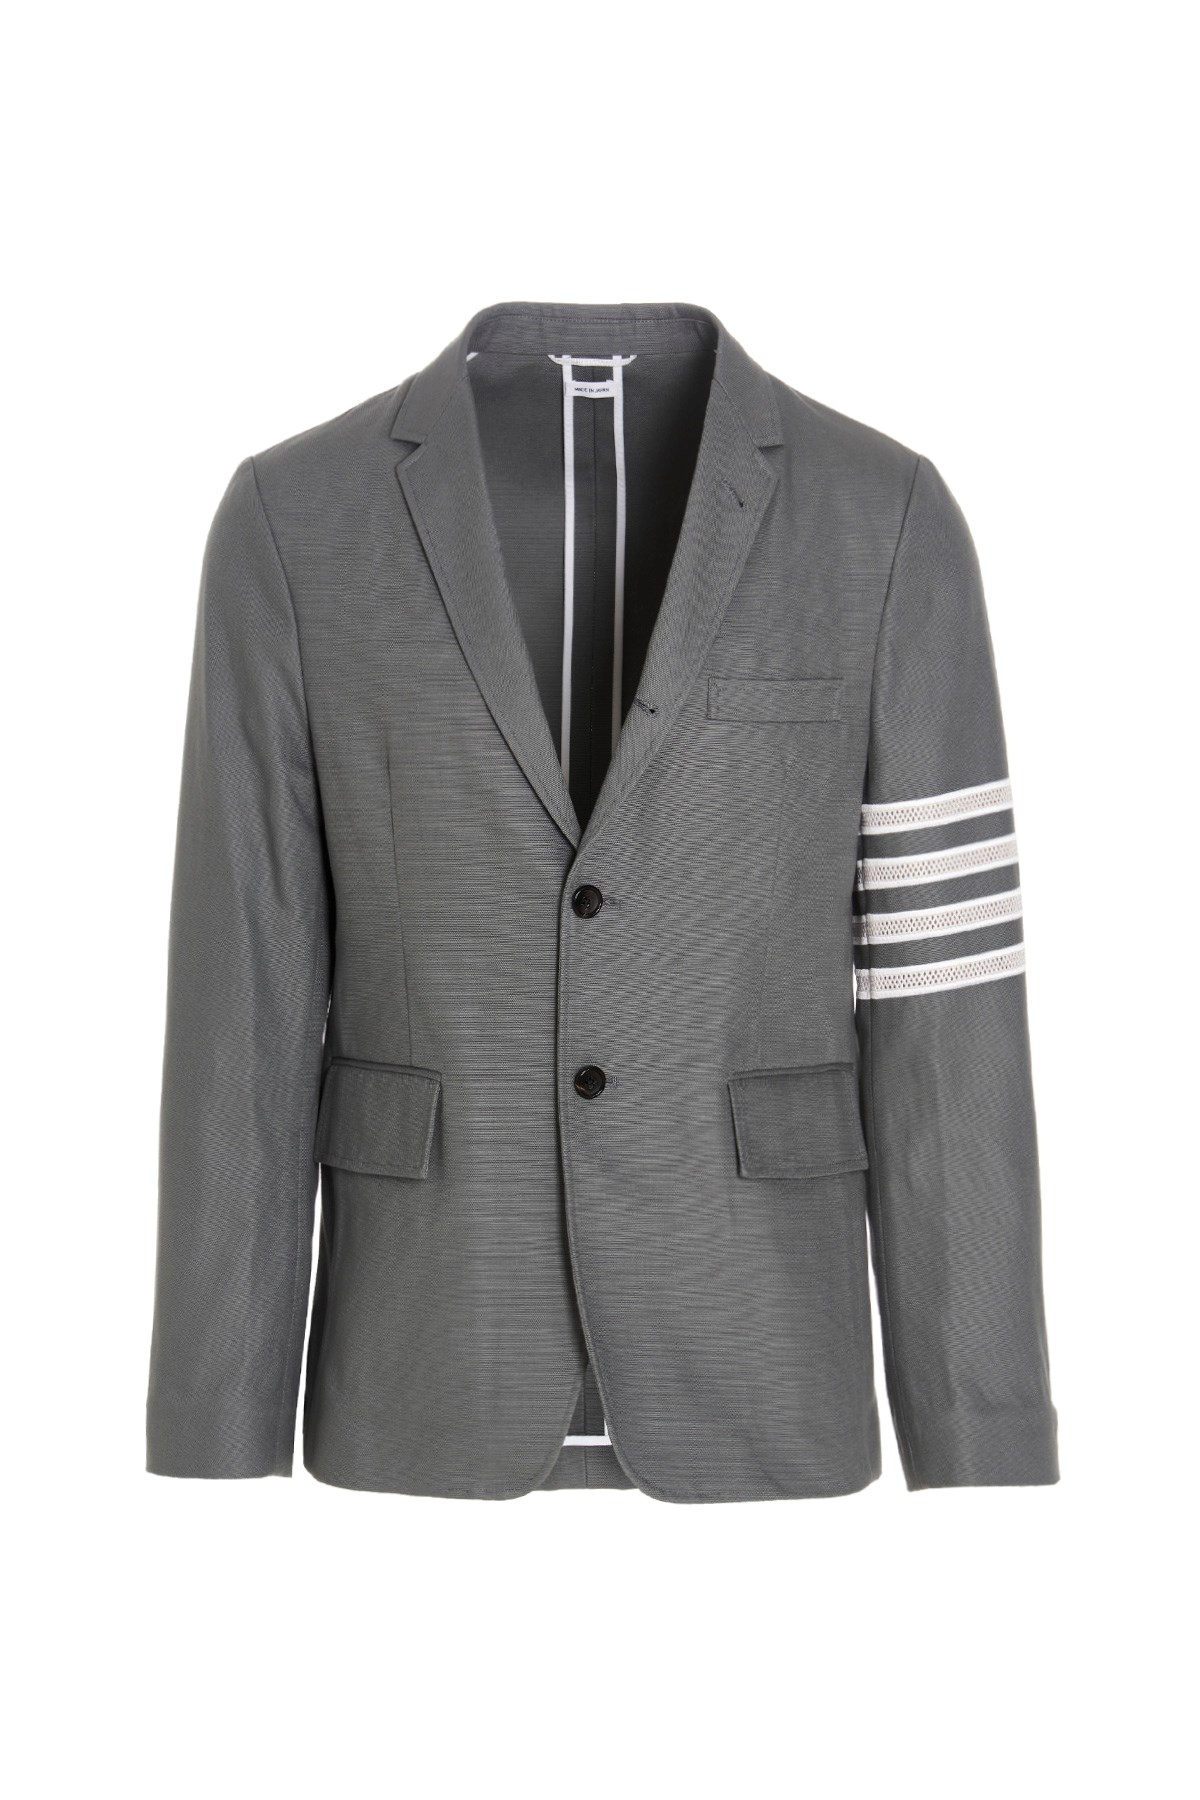 THOM BROWNE 'Unconstructed’ Blazer Jacket